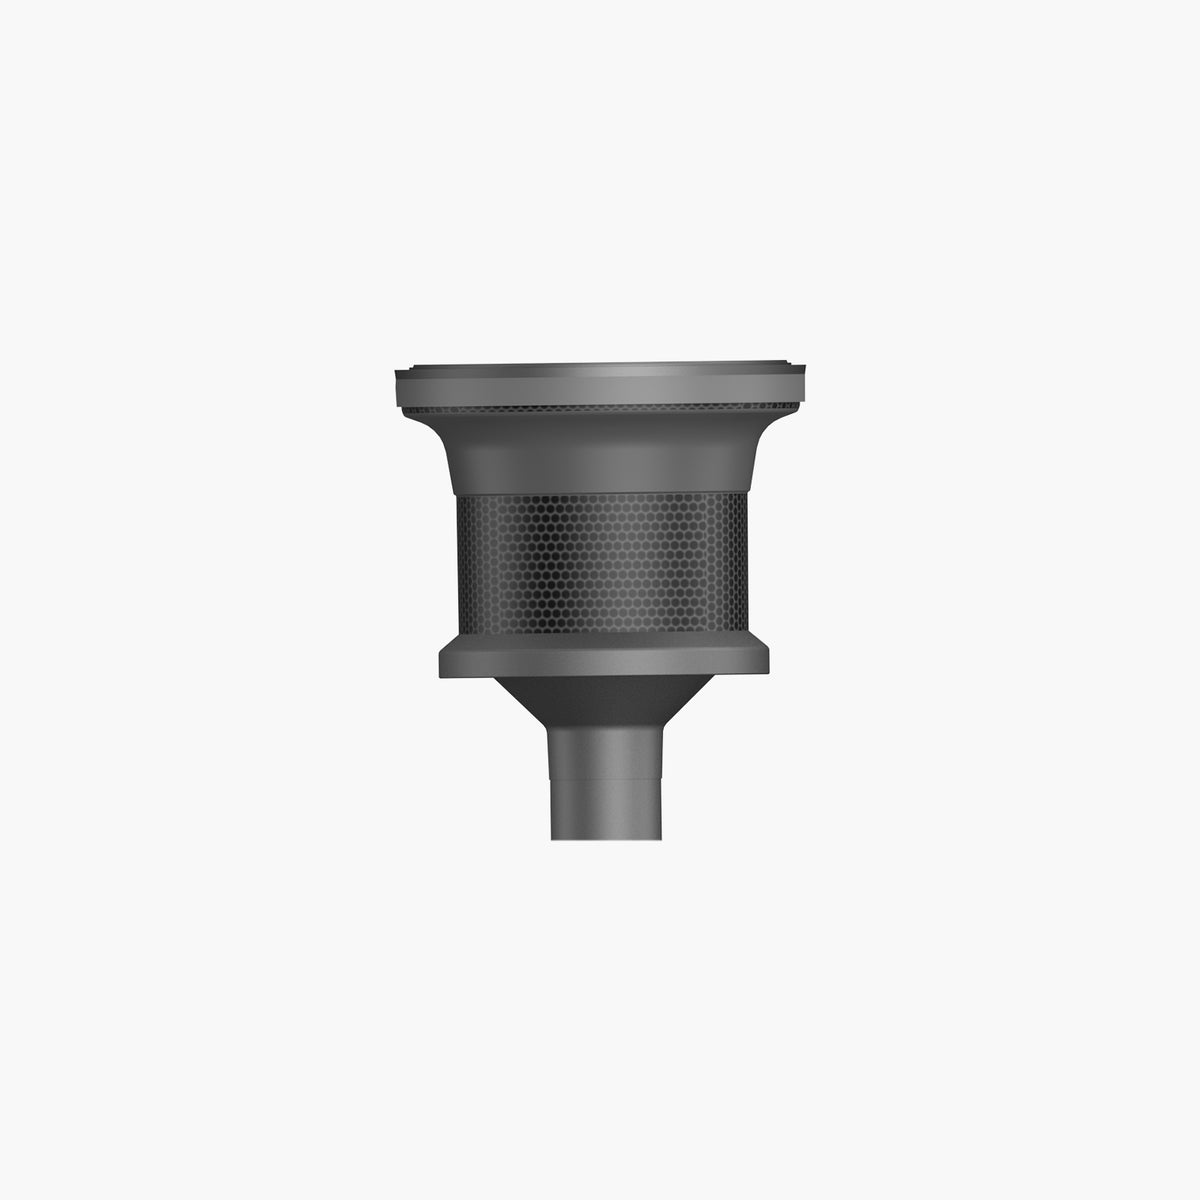 Dust bucket (without filter assembly) for U12 Vesla – Ultenic